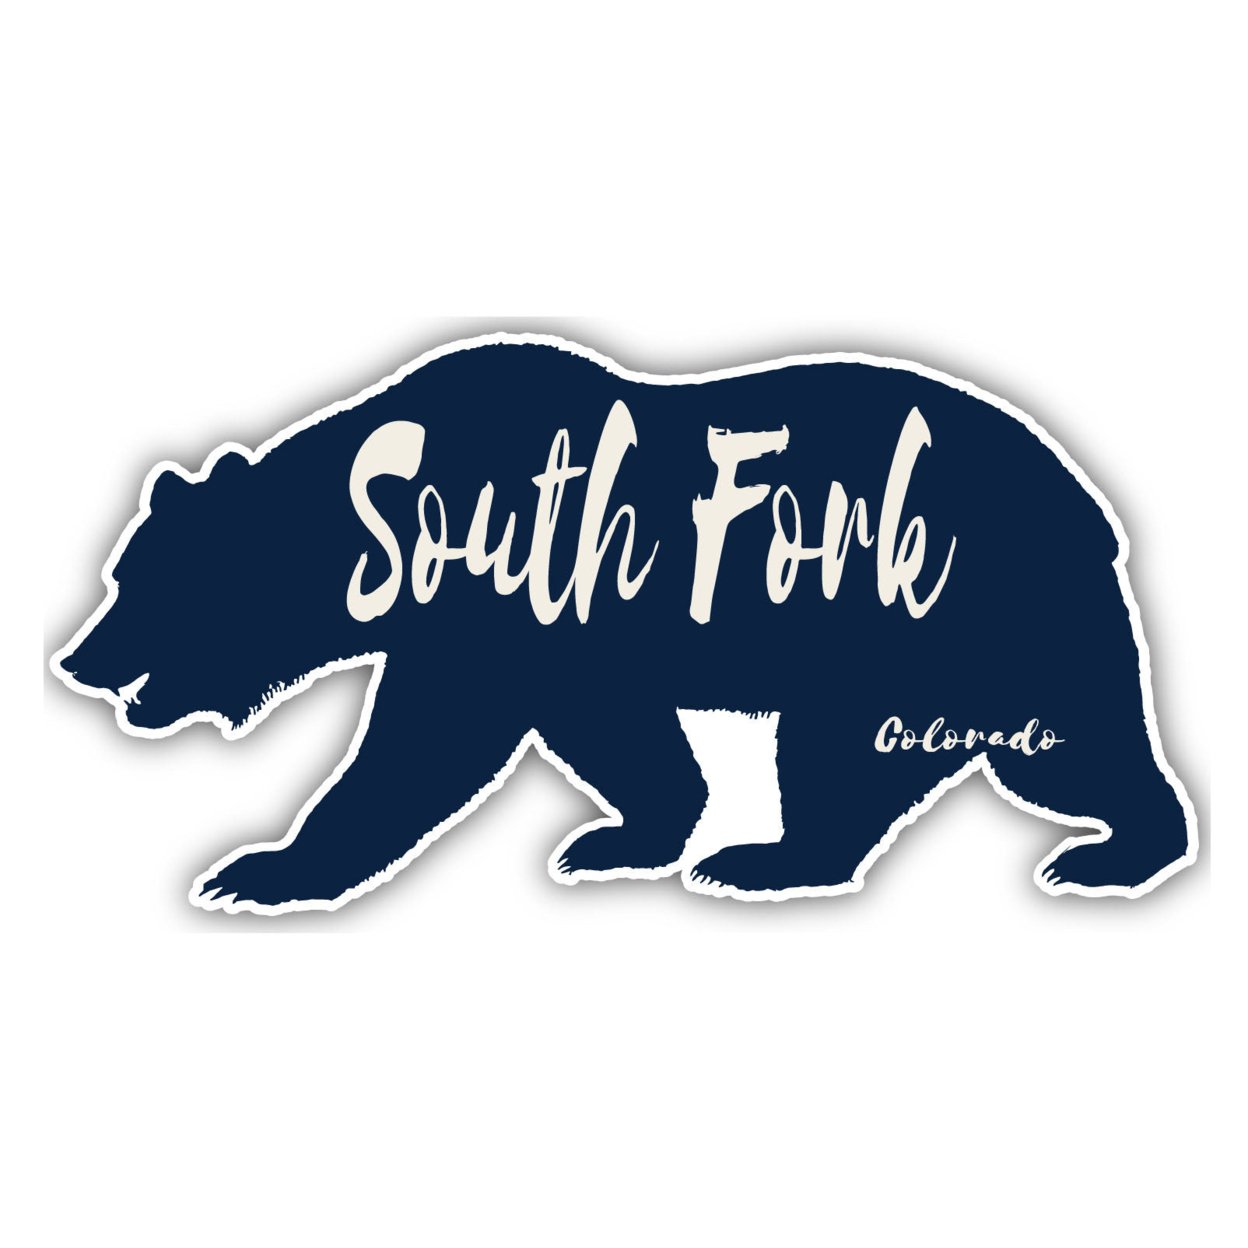 South Fork Colorado Souvenir Decorative Stickers (Choose Theme And Size) - Single Unit, 4-Inch, Tent